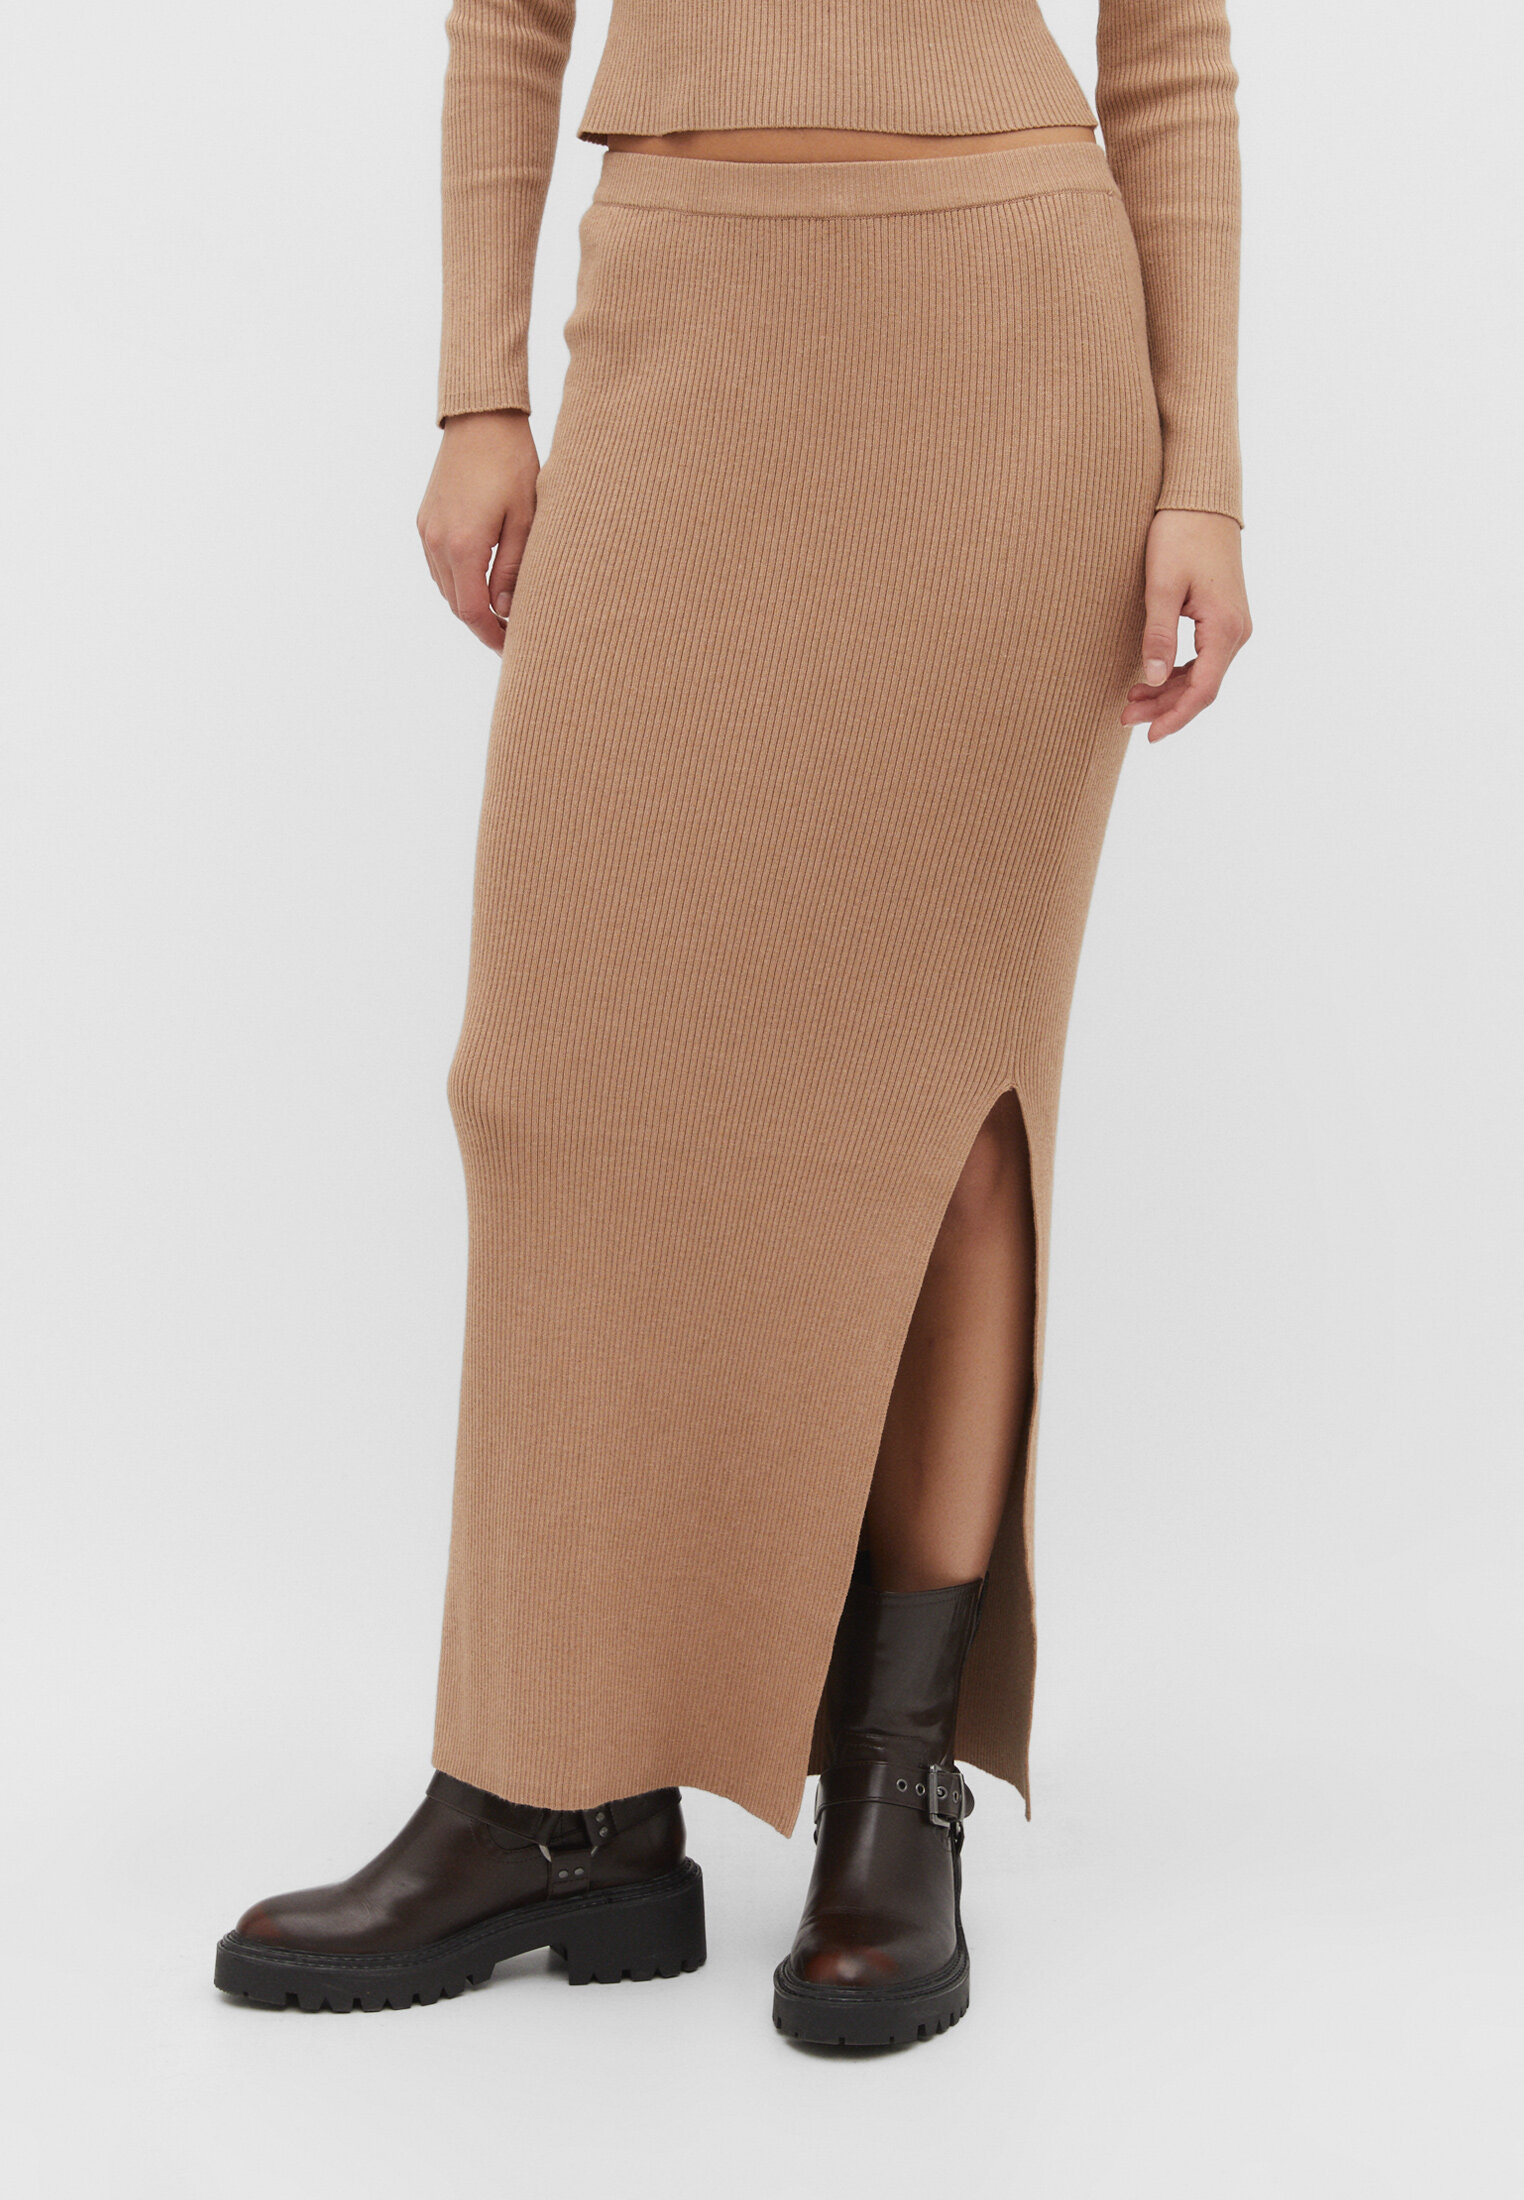 Long knit skirt with slit - Women's fashion | Stradivarius United